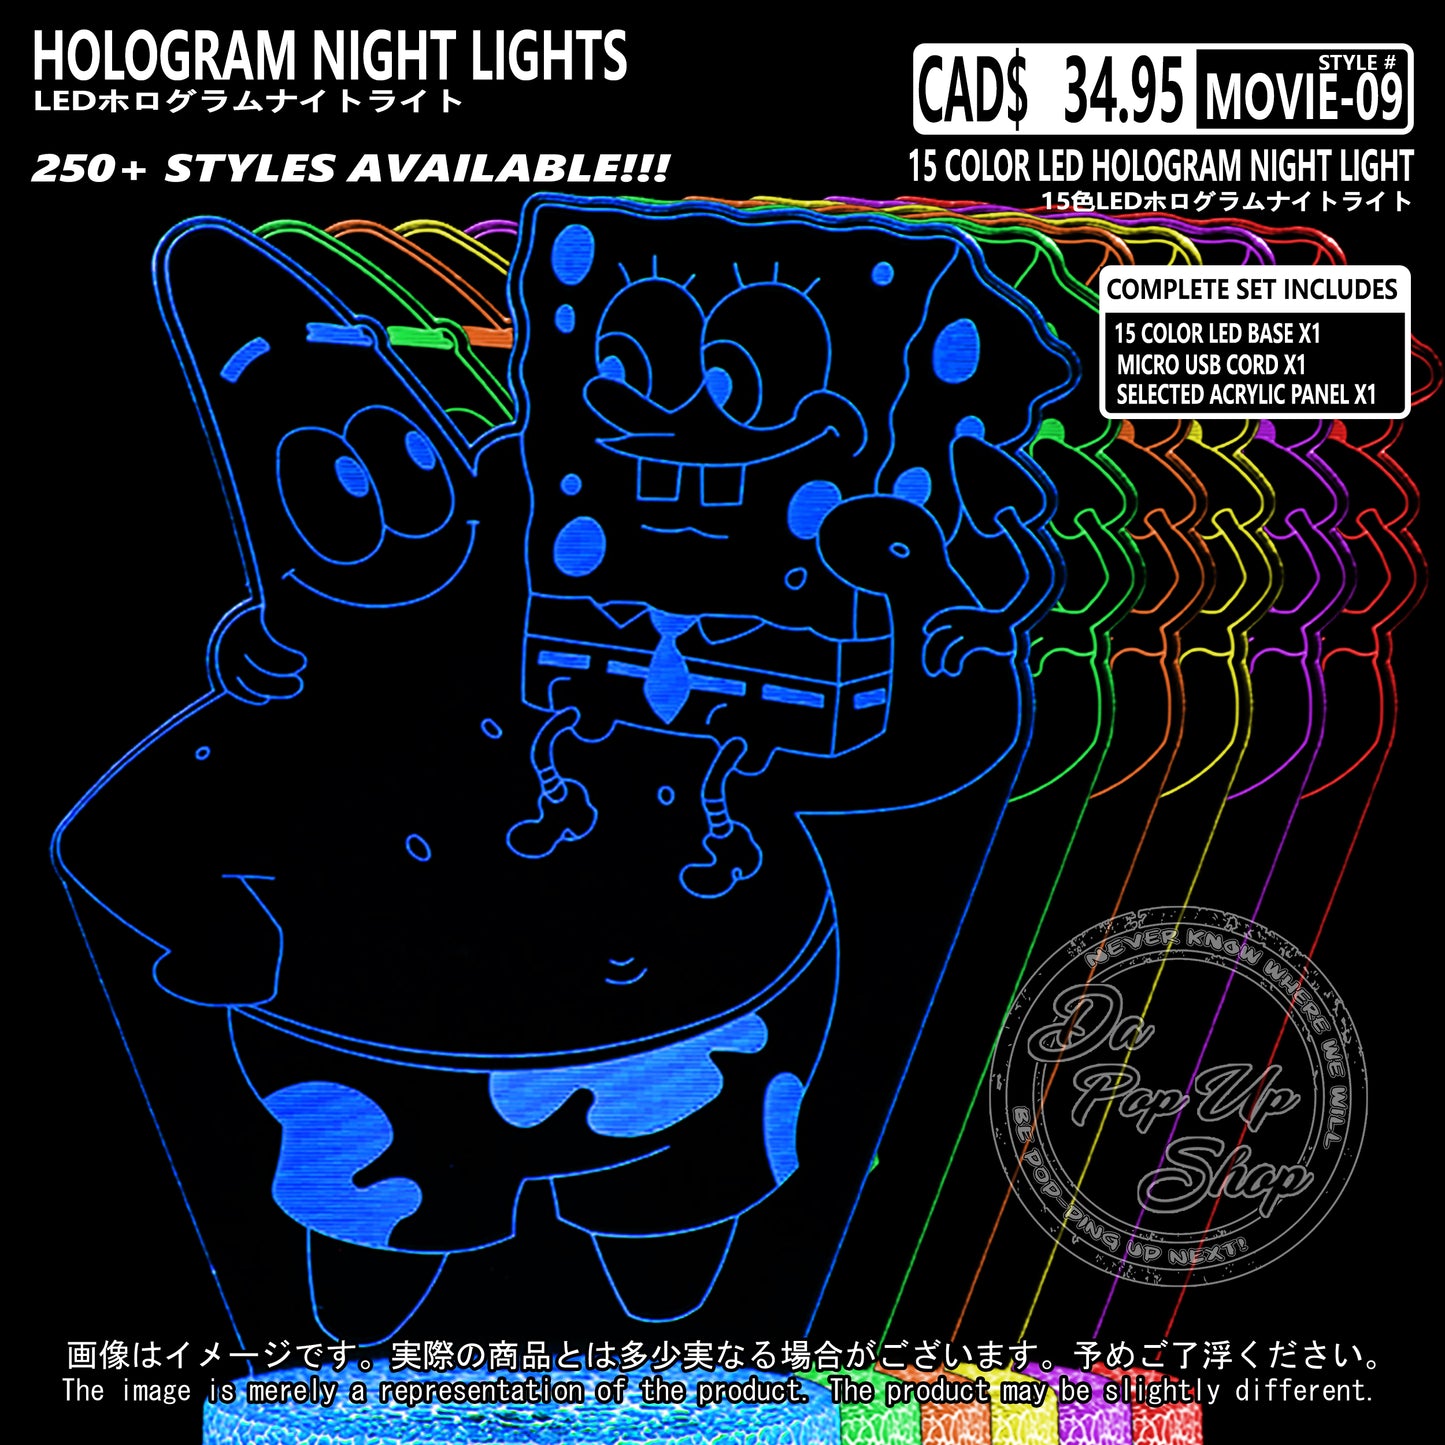 (MOVIE-09) PATRICK STAR SpongeBob SquarePants Hologram LED Night Light